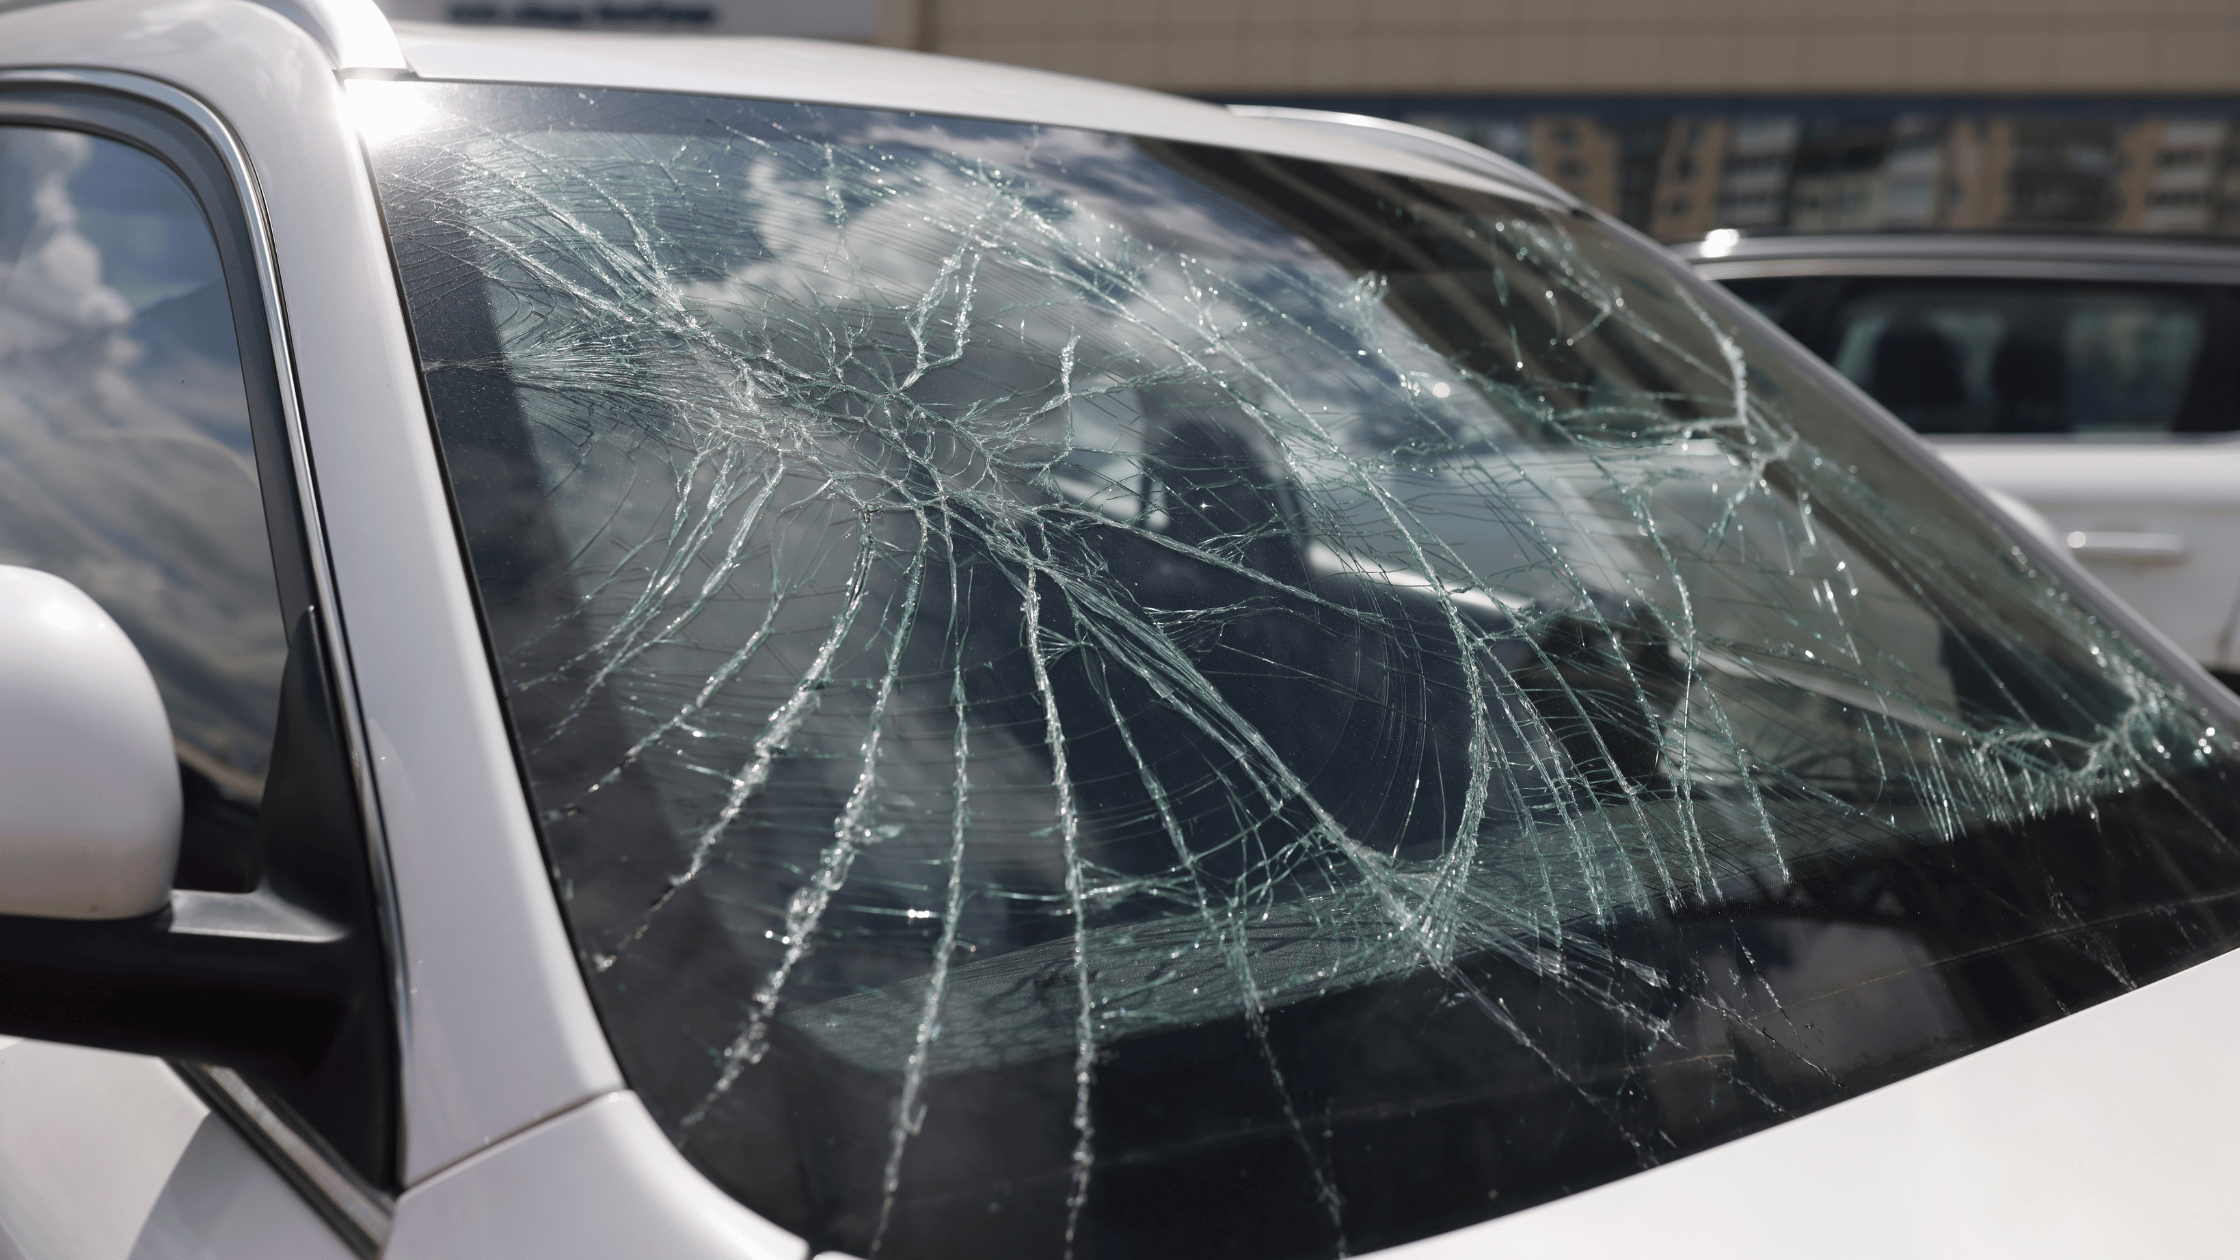 Авто трещина. Разбитое стекло авто. Трещина на стекле автомобиля. Разбитое стекло фото. Разбитое лобовое стекло грузовика.